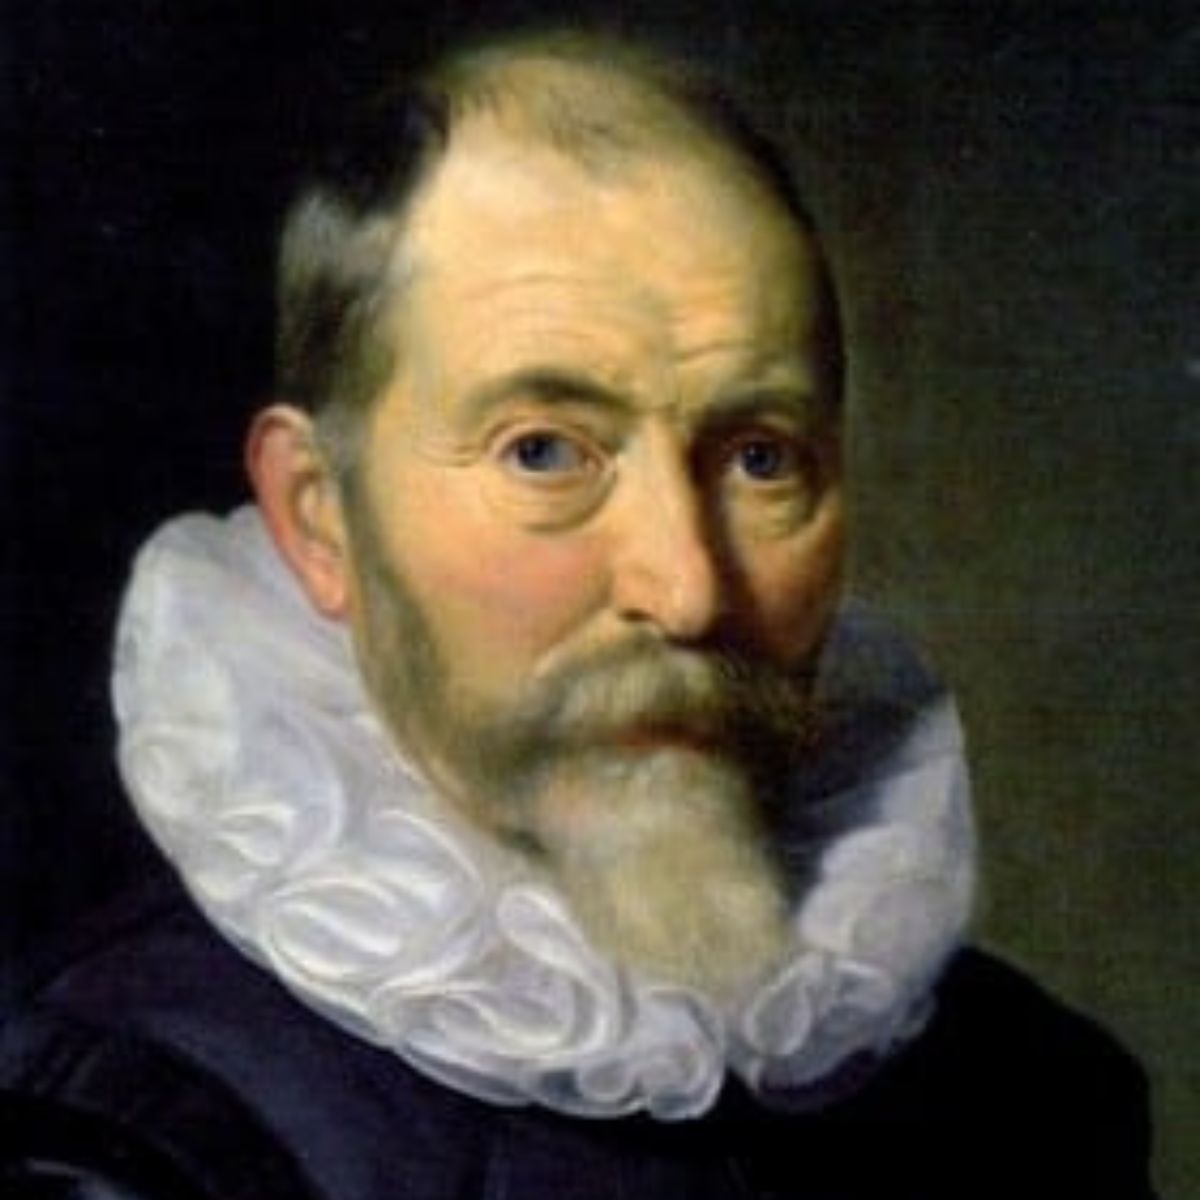 Willem Janszoon